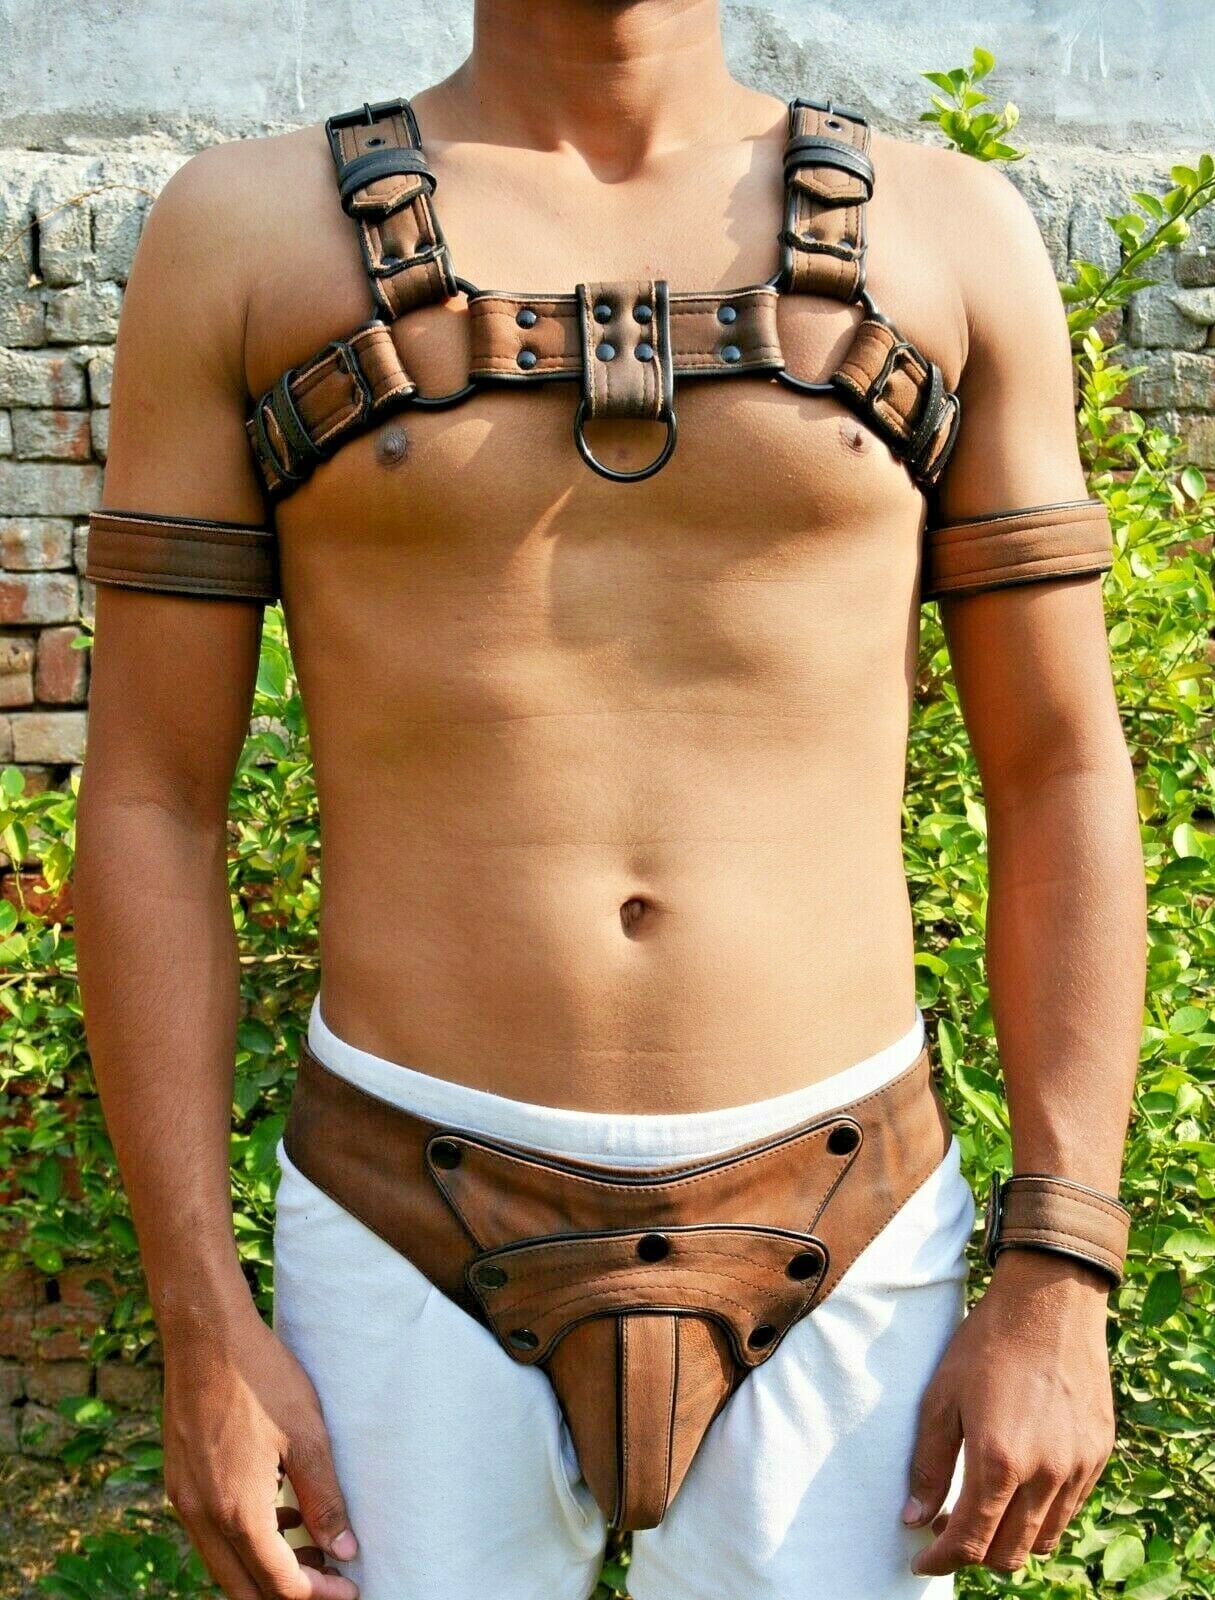 Men's Male Soft Leather Body Chest Harness Belt Night Clubwear Costume jockstraps - MRI Leathers